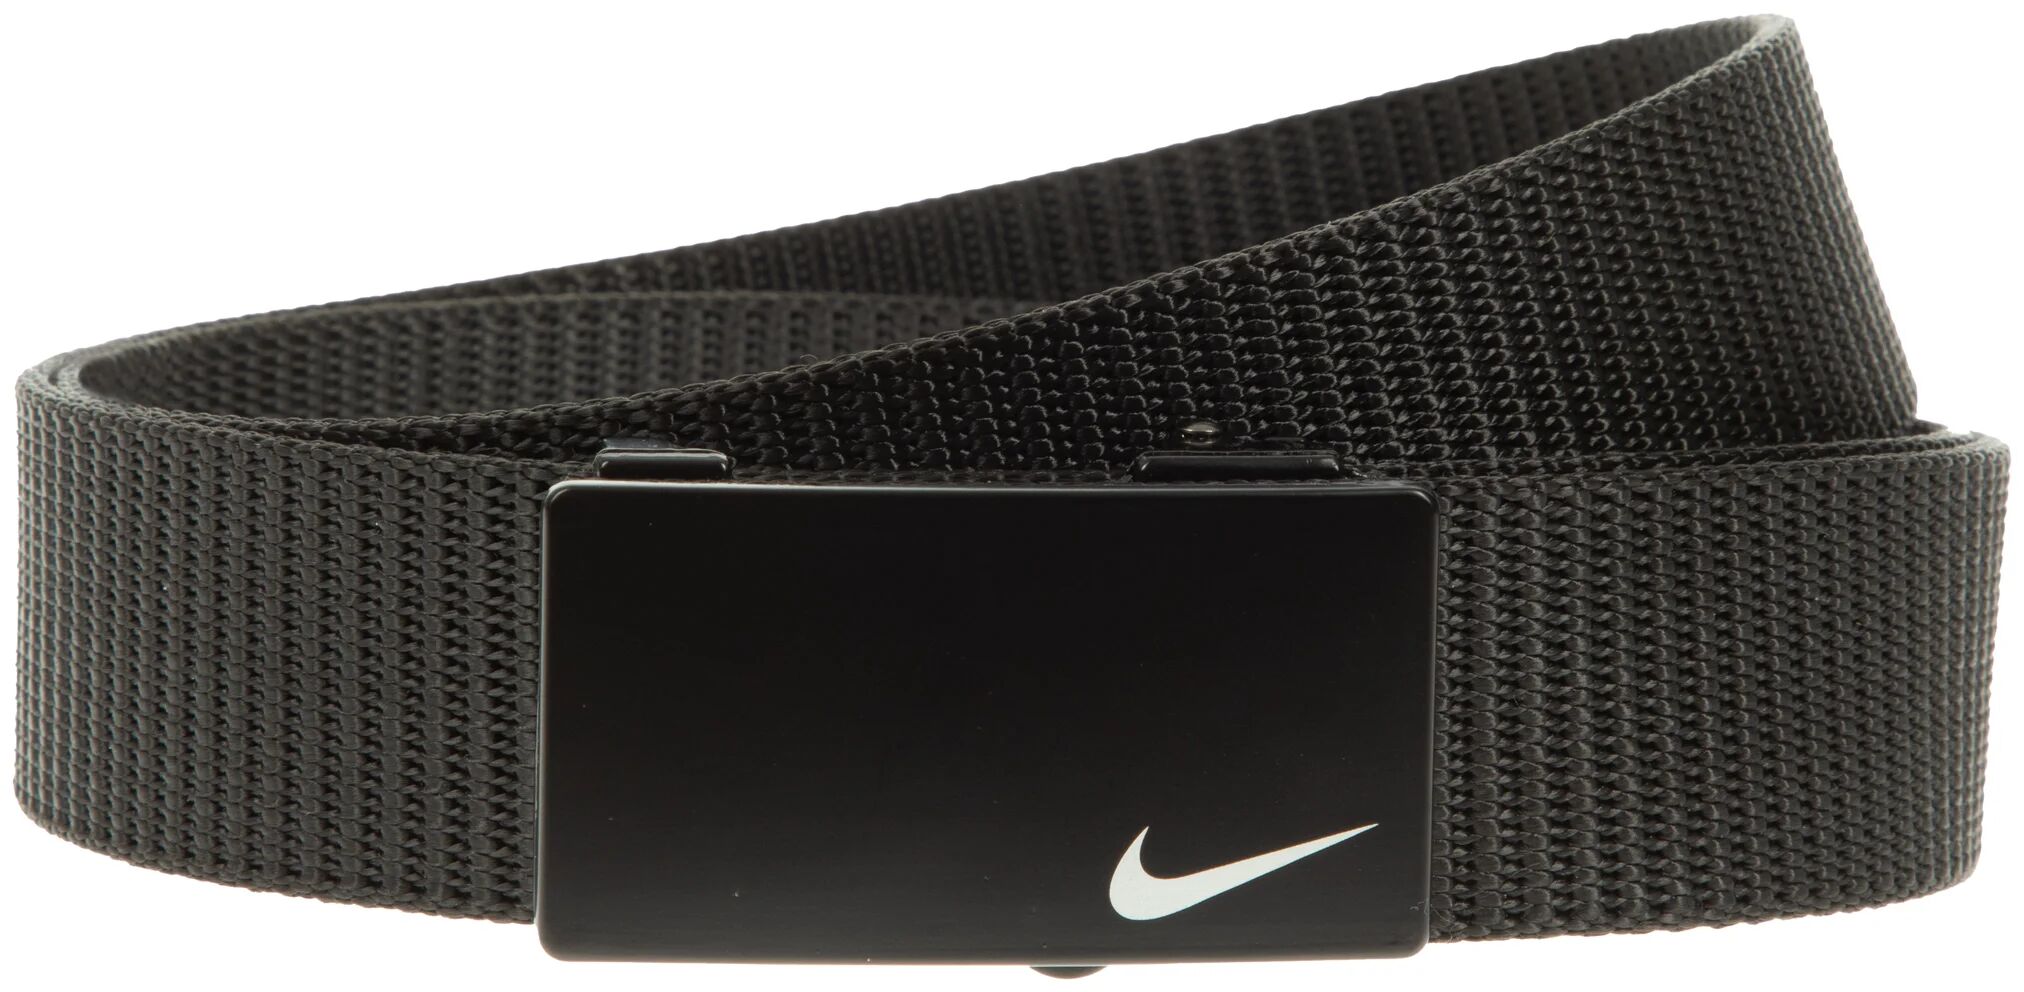 Nike Tech Grip Web Men's Golf Belt - Black, Size: Medium (34-36)